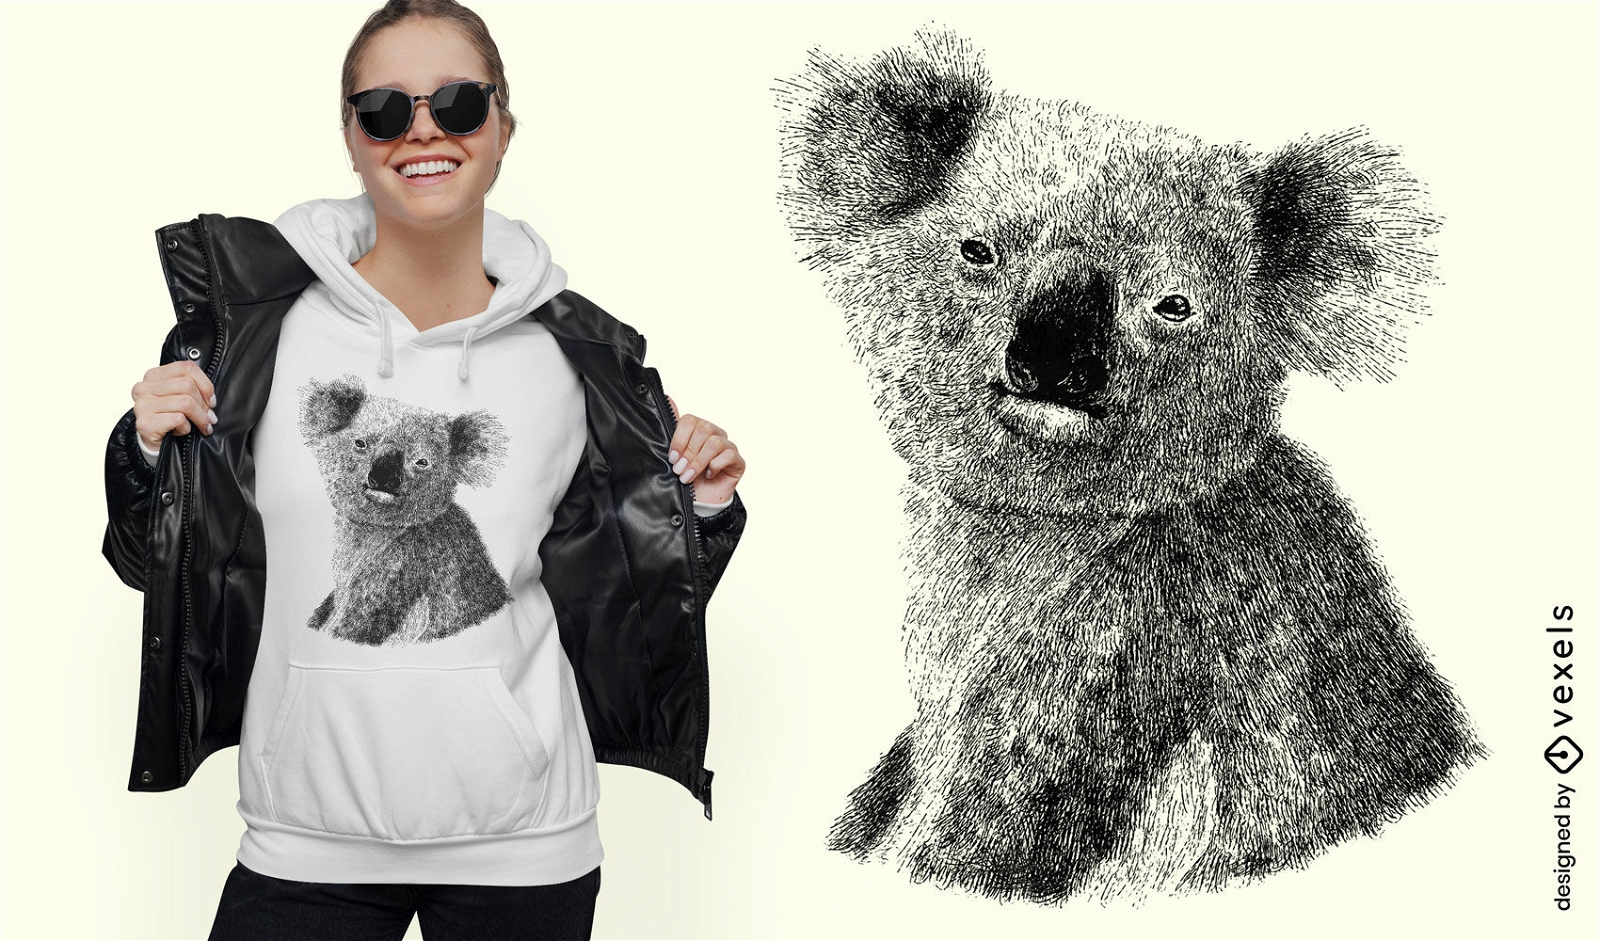 Diseño de camiseta de koala dibujado a mano